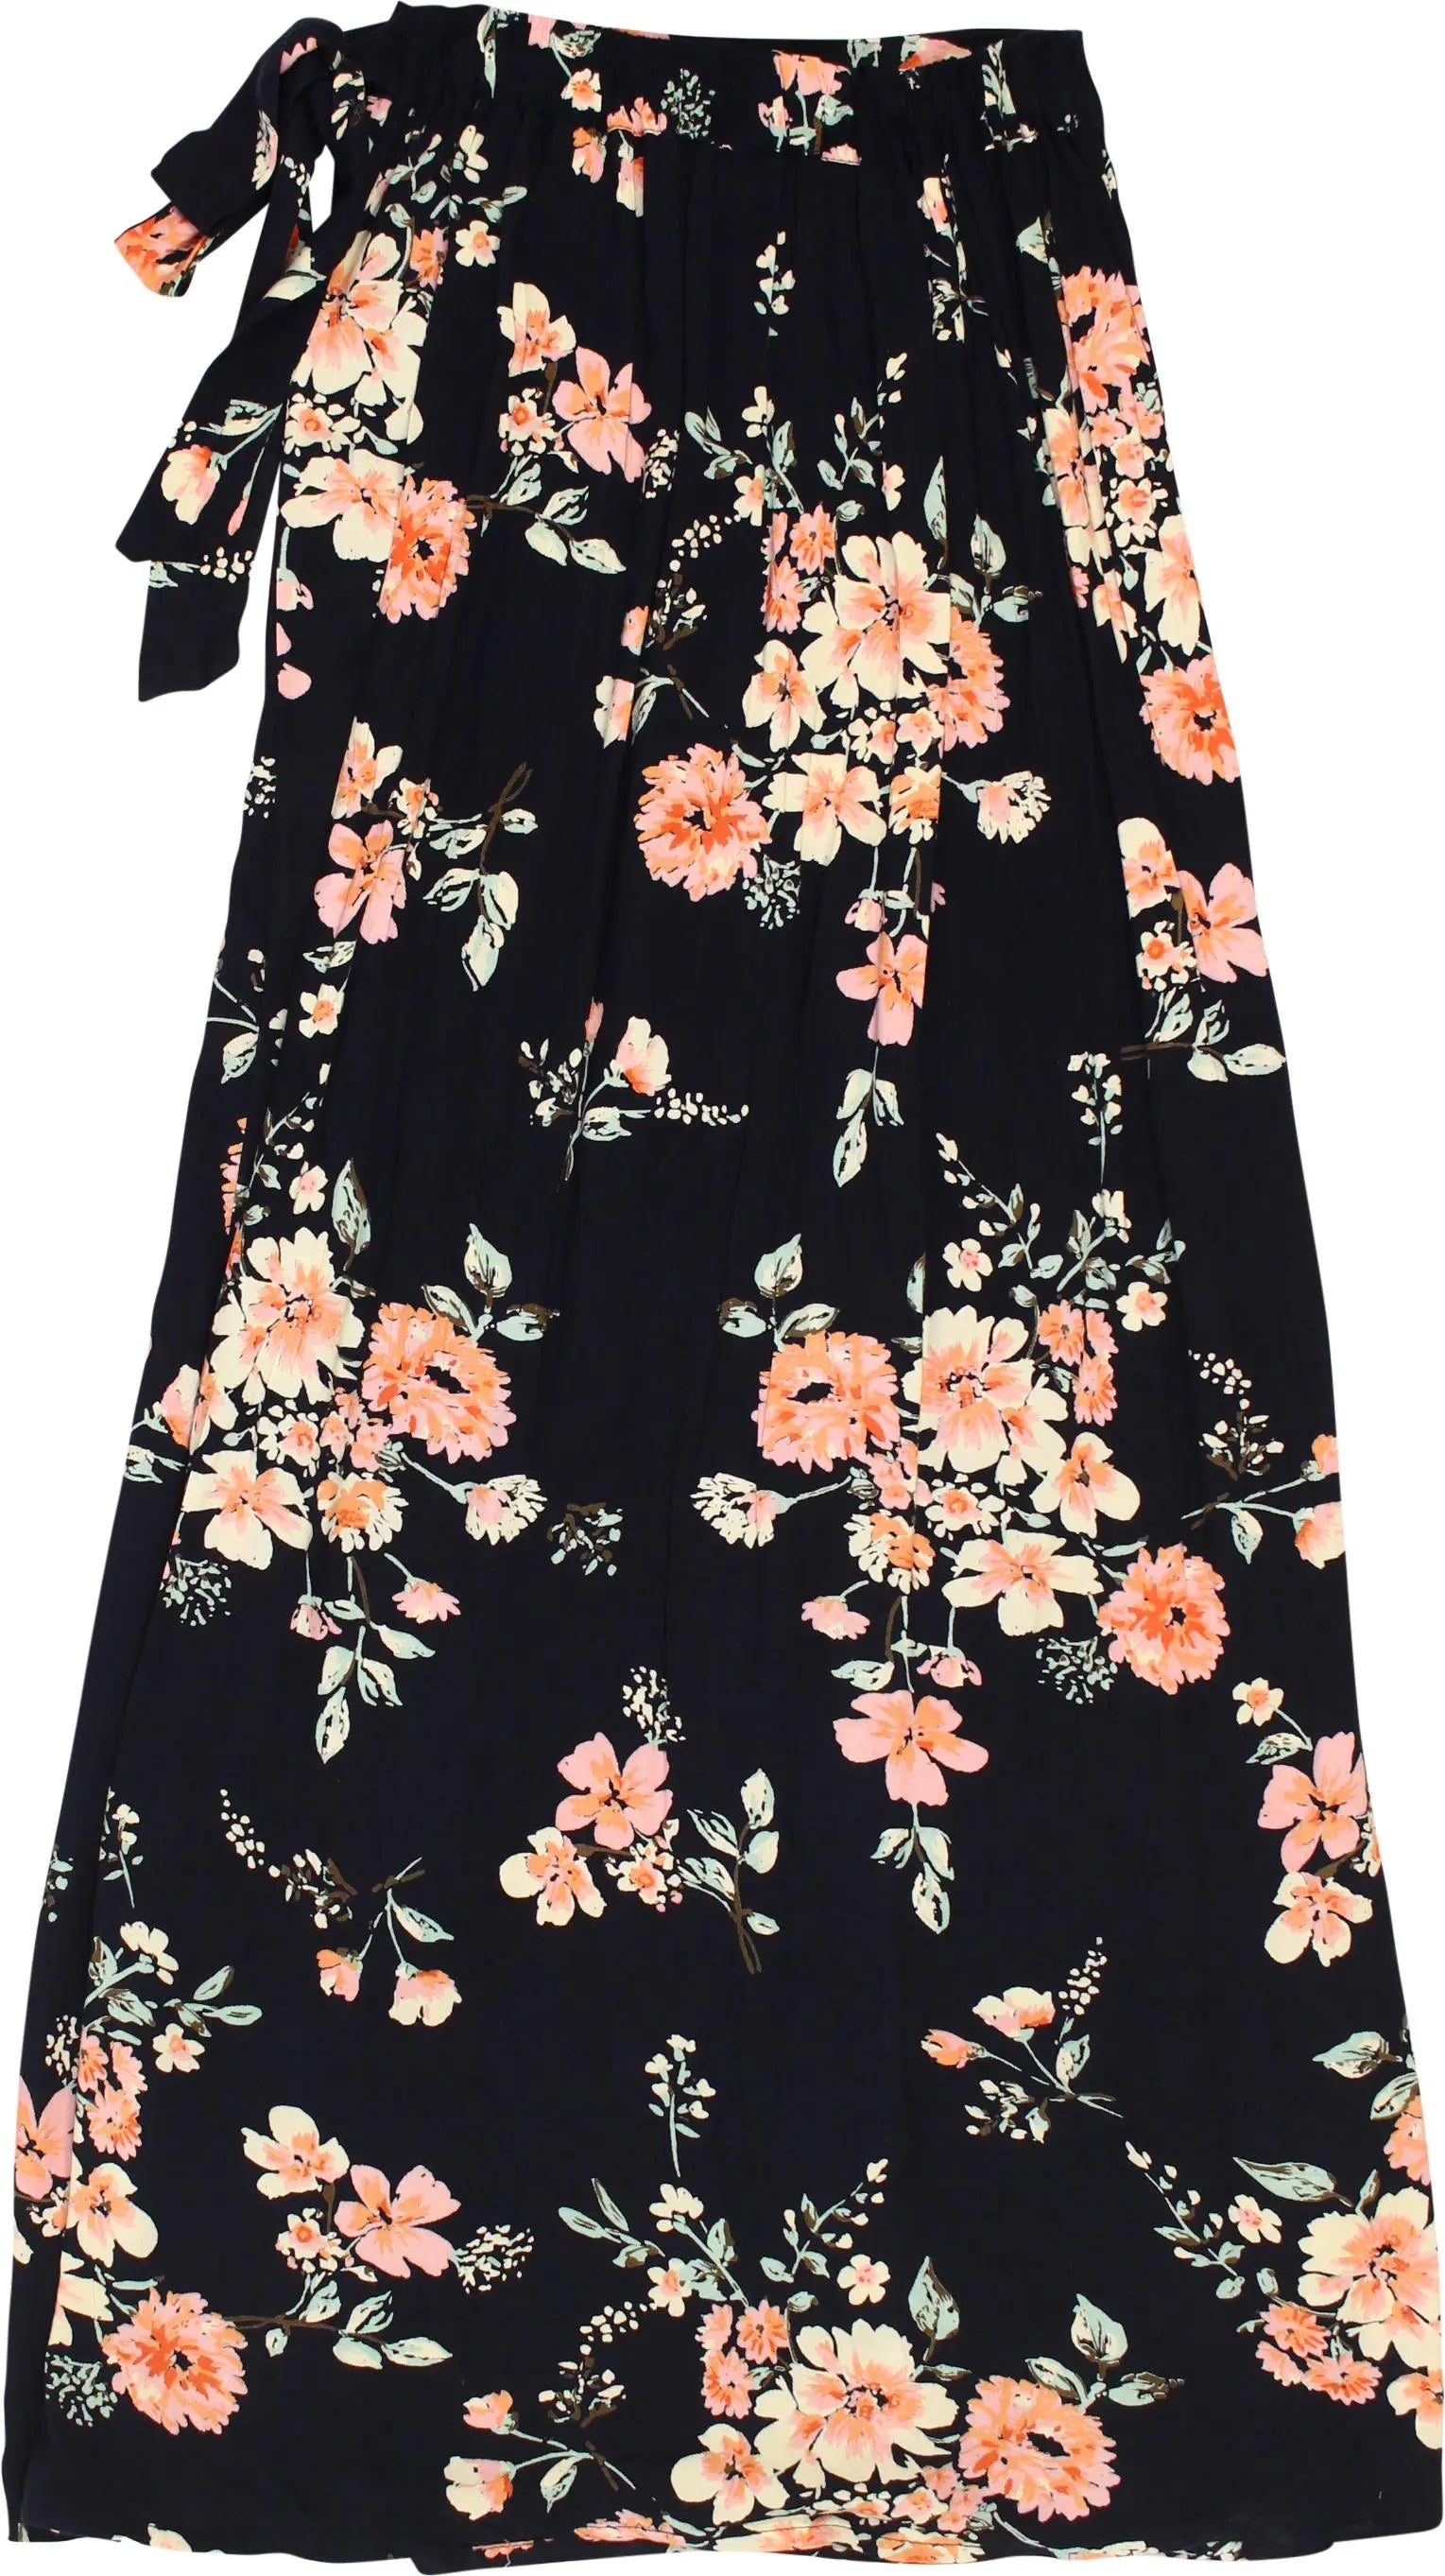 Japna - Floral Wrap Skirt- ThriftTale.com - Vintage and second handclothing